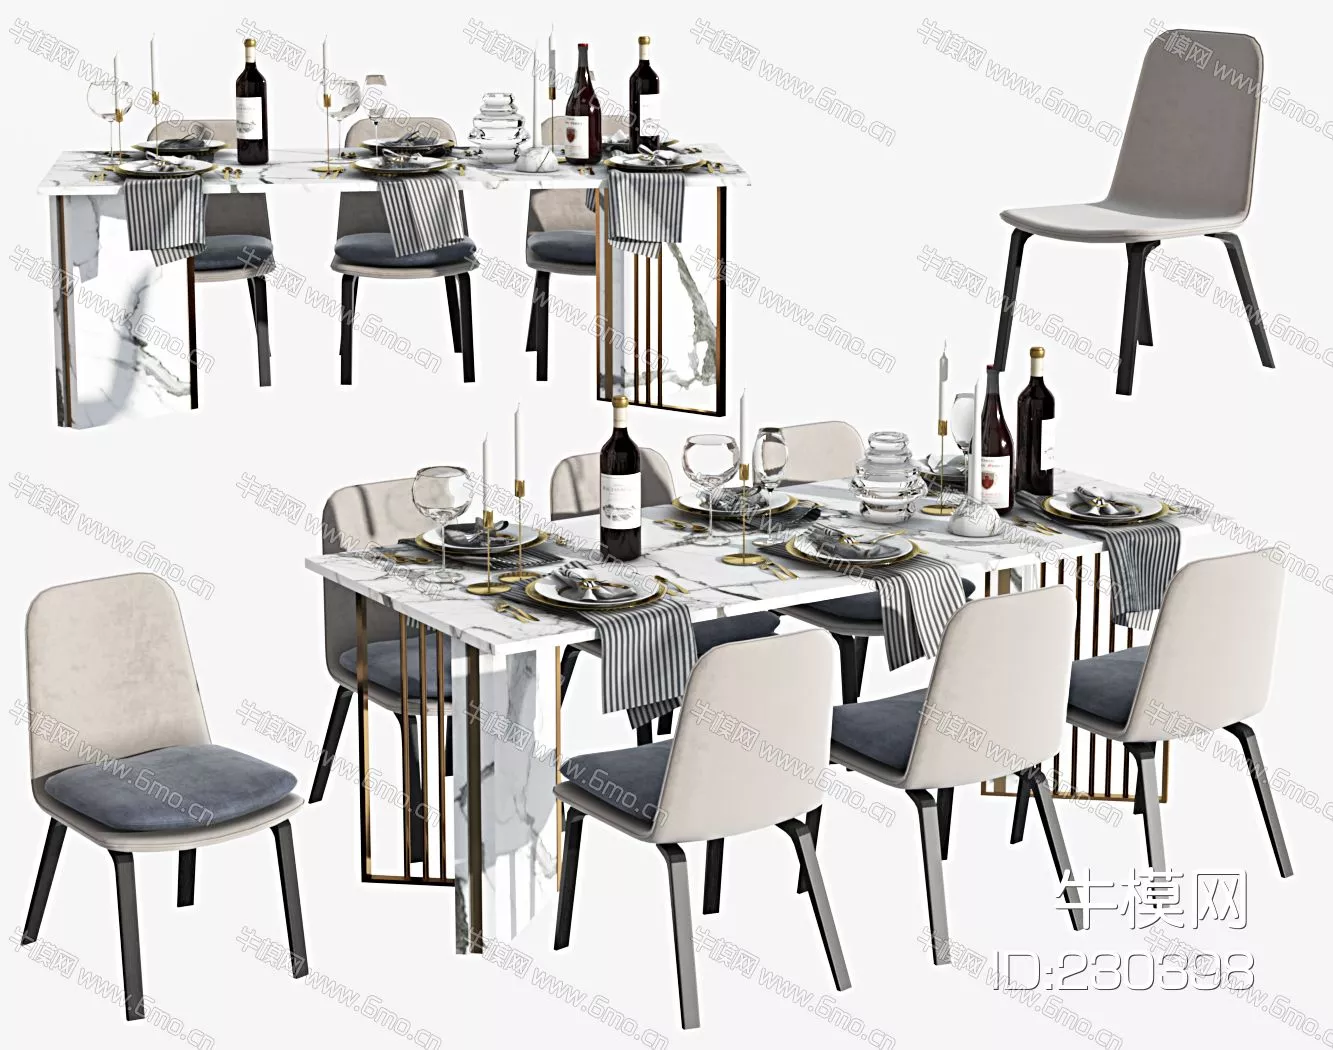 MODERN DINING TABLE SET - SKETCHUP 3D MODEL - VRAY - 230398